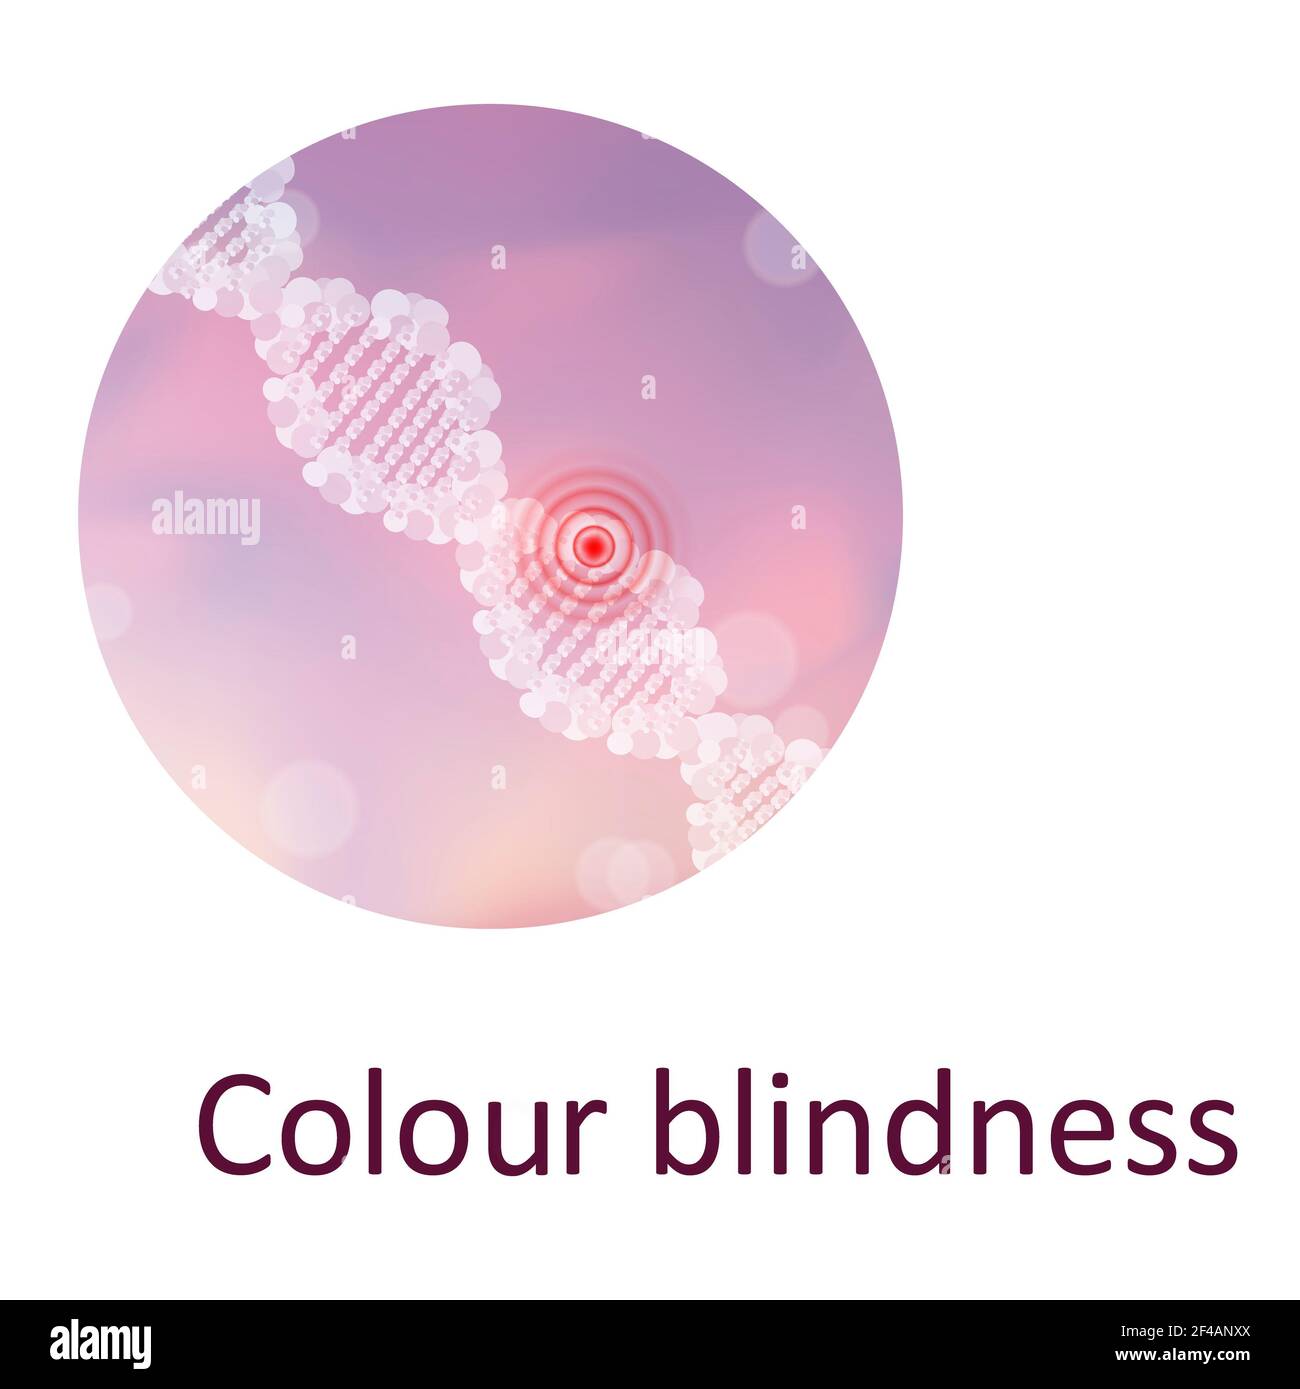 Colour blindness, illustration Stock Photo